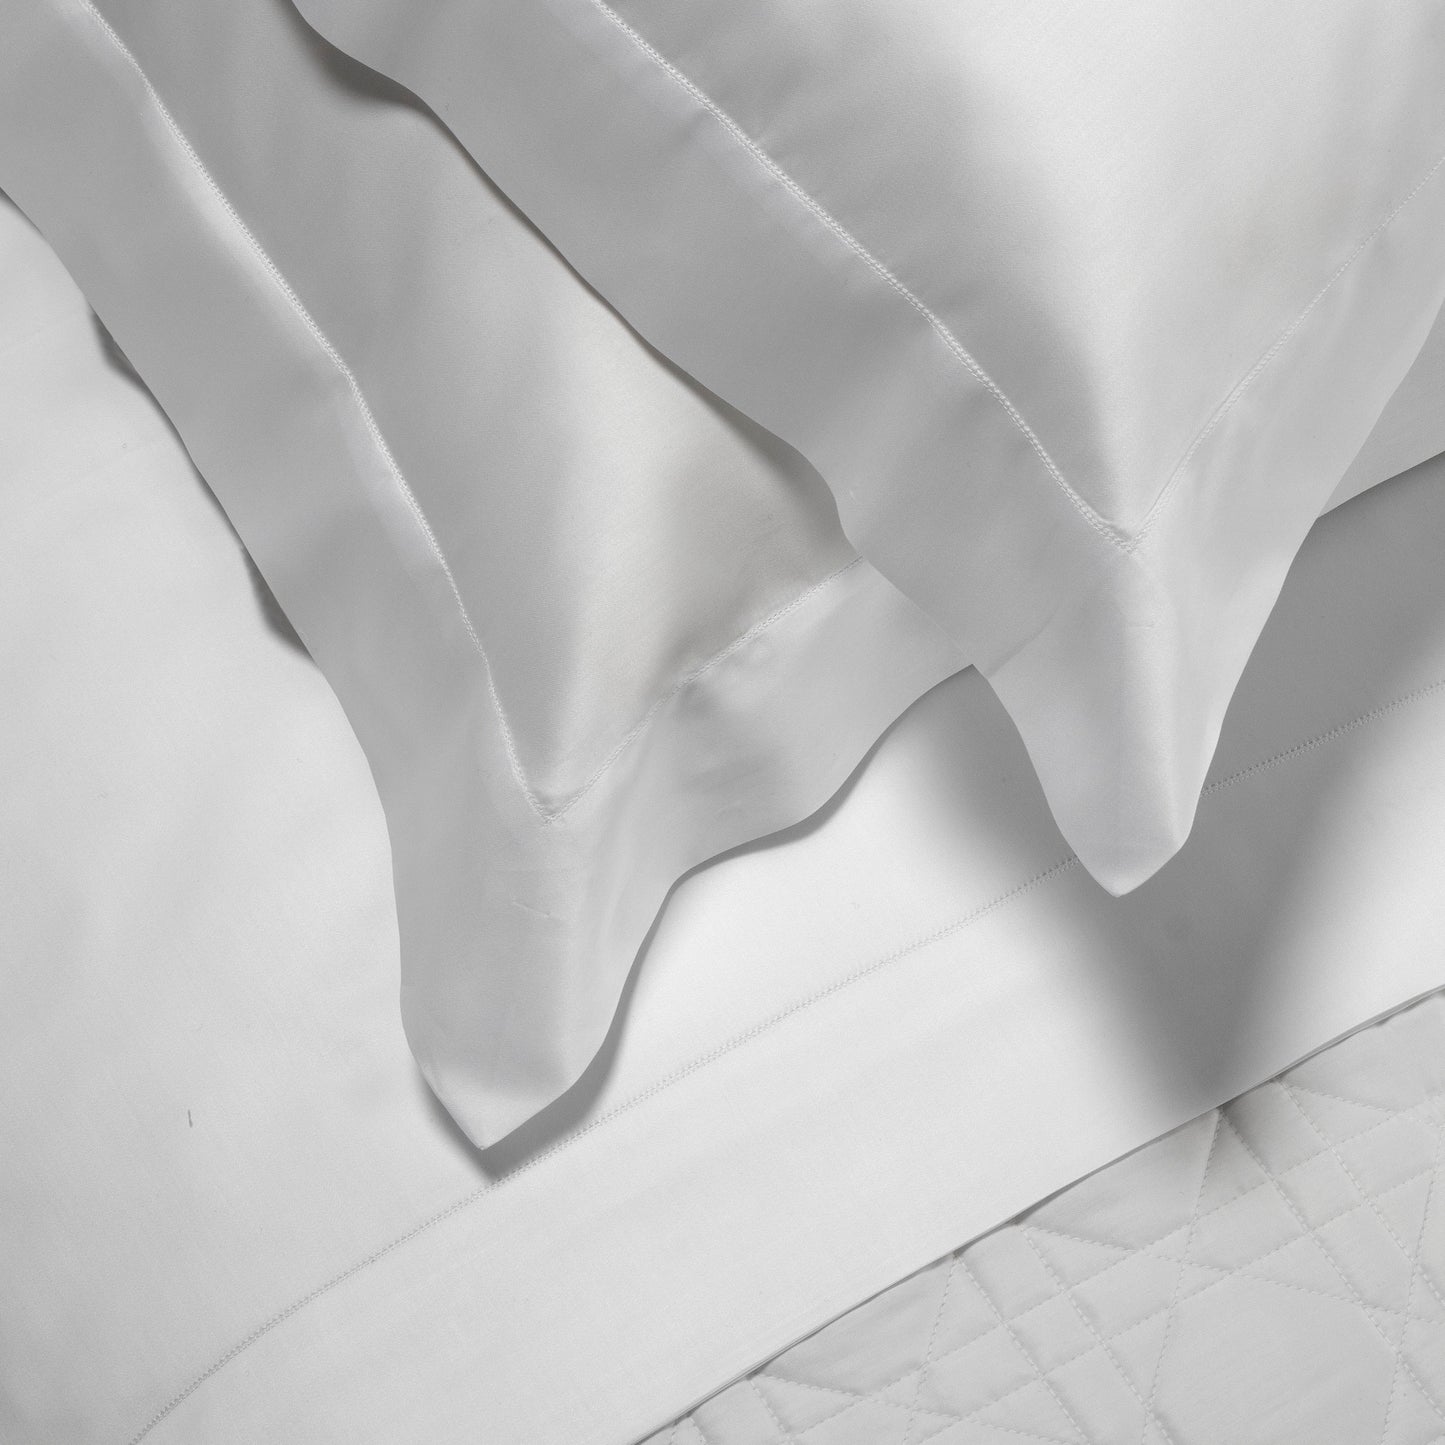 600TC Supima Cotton Percale Pillowcase - Fascino